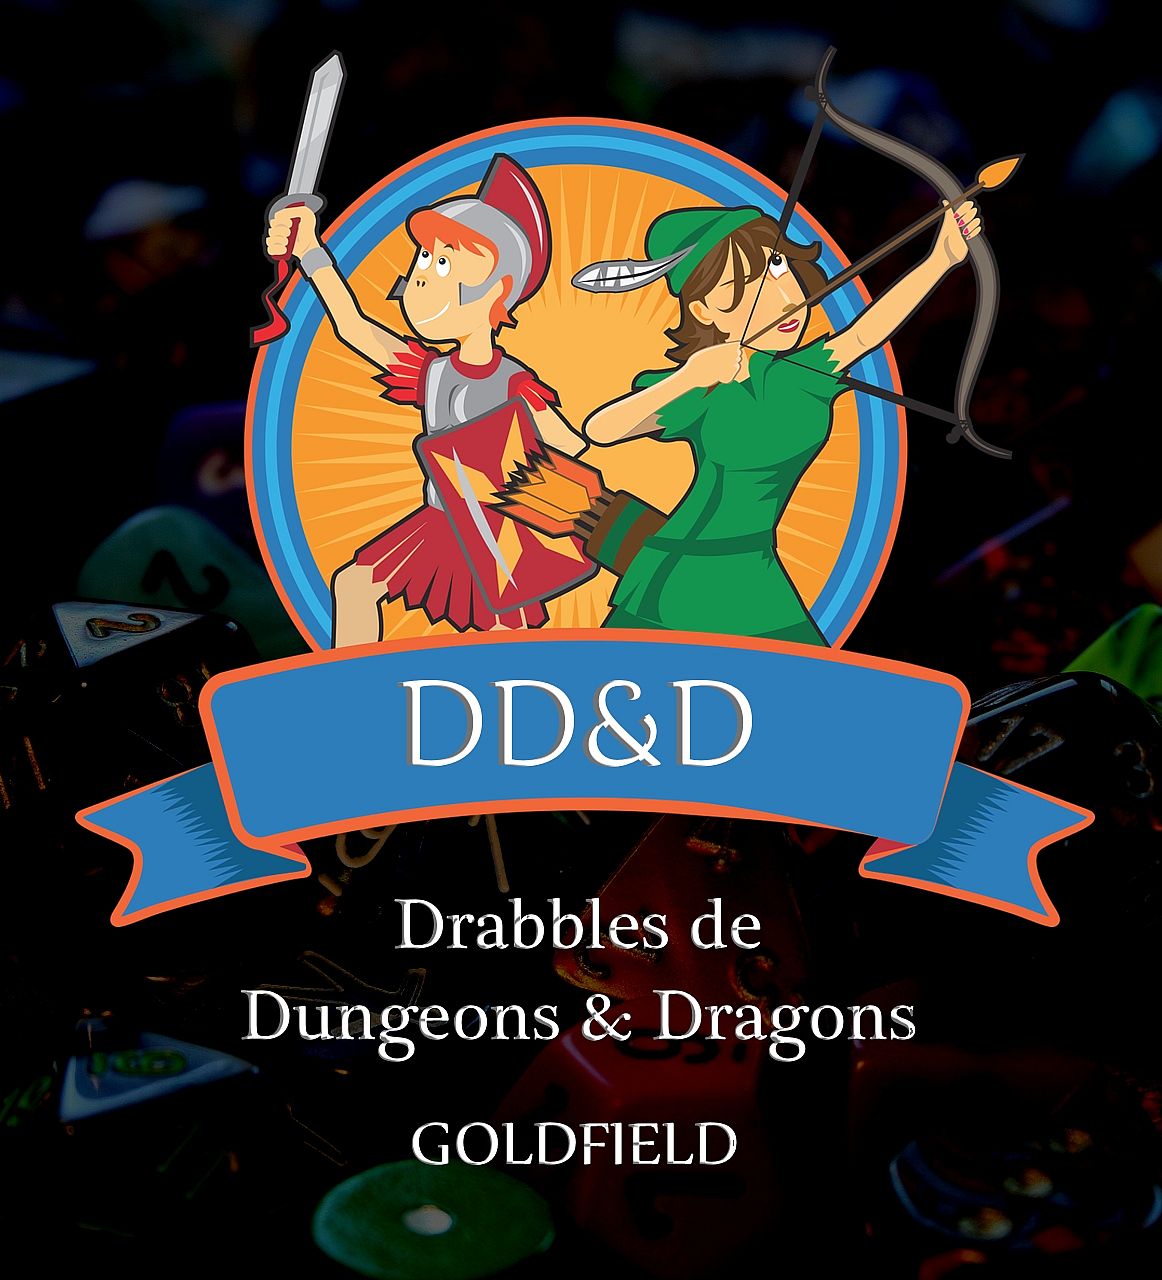 DD&D: Drabbles de Dungeons & Dragons